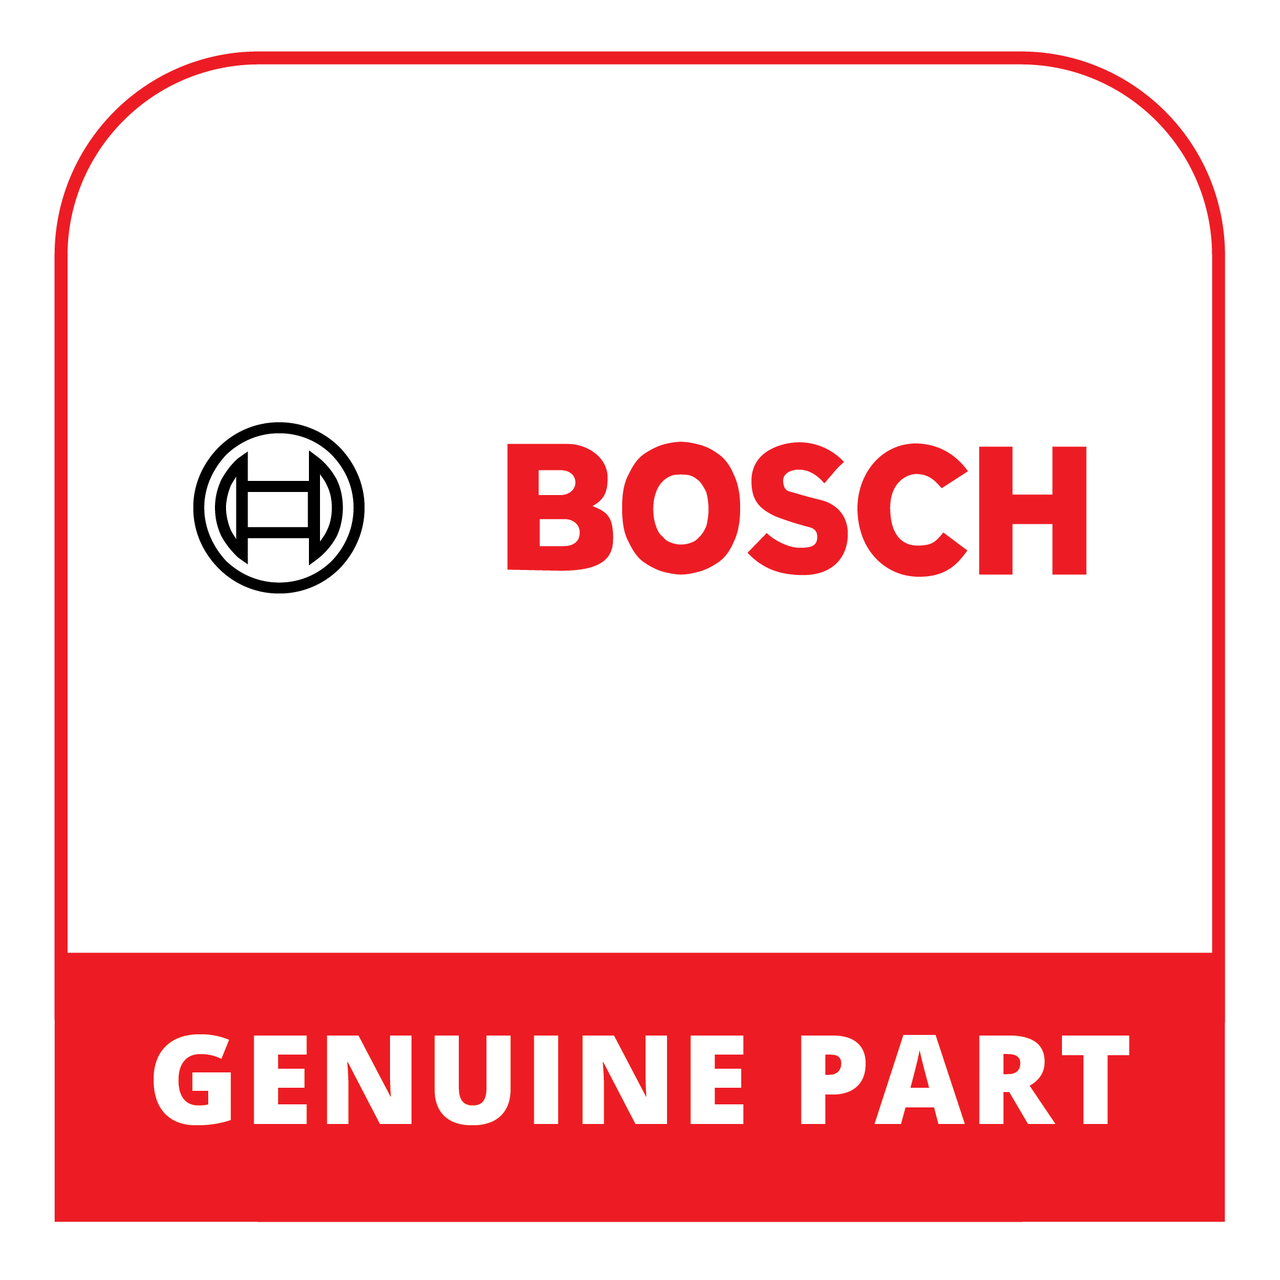 Bosch (Thermador) 10011779 - Screw - Genuine Bosch (Thermador) Part